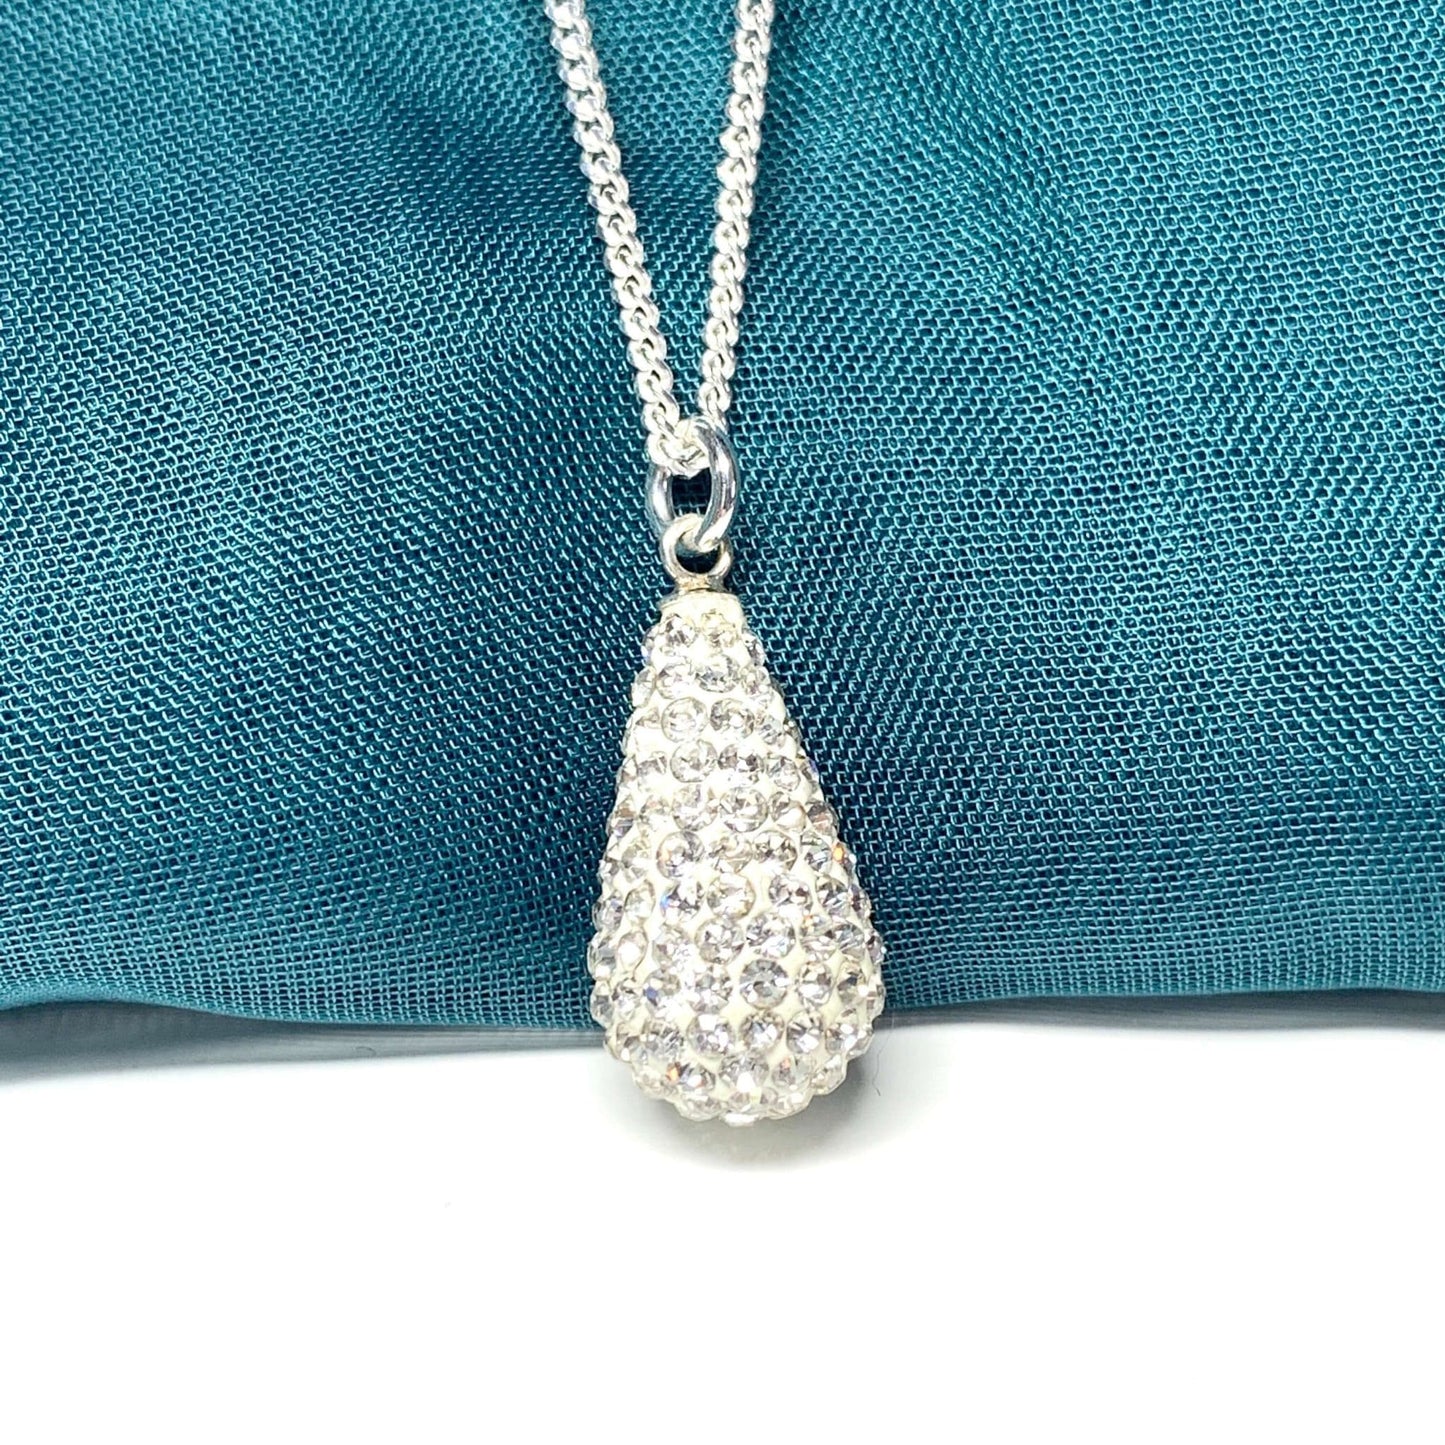 Not Tresor Paris white teardrop pear shape necklace pendant